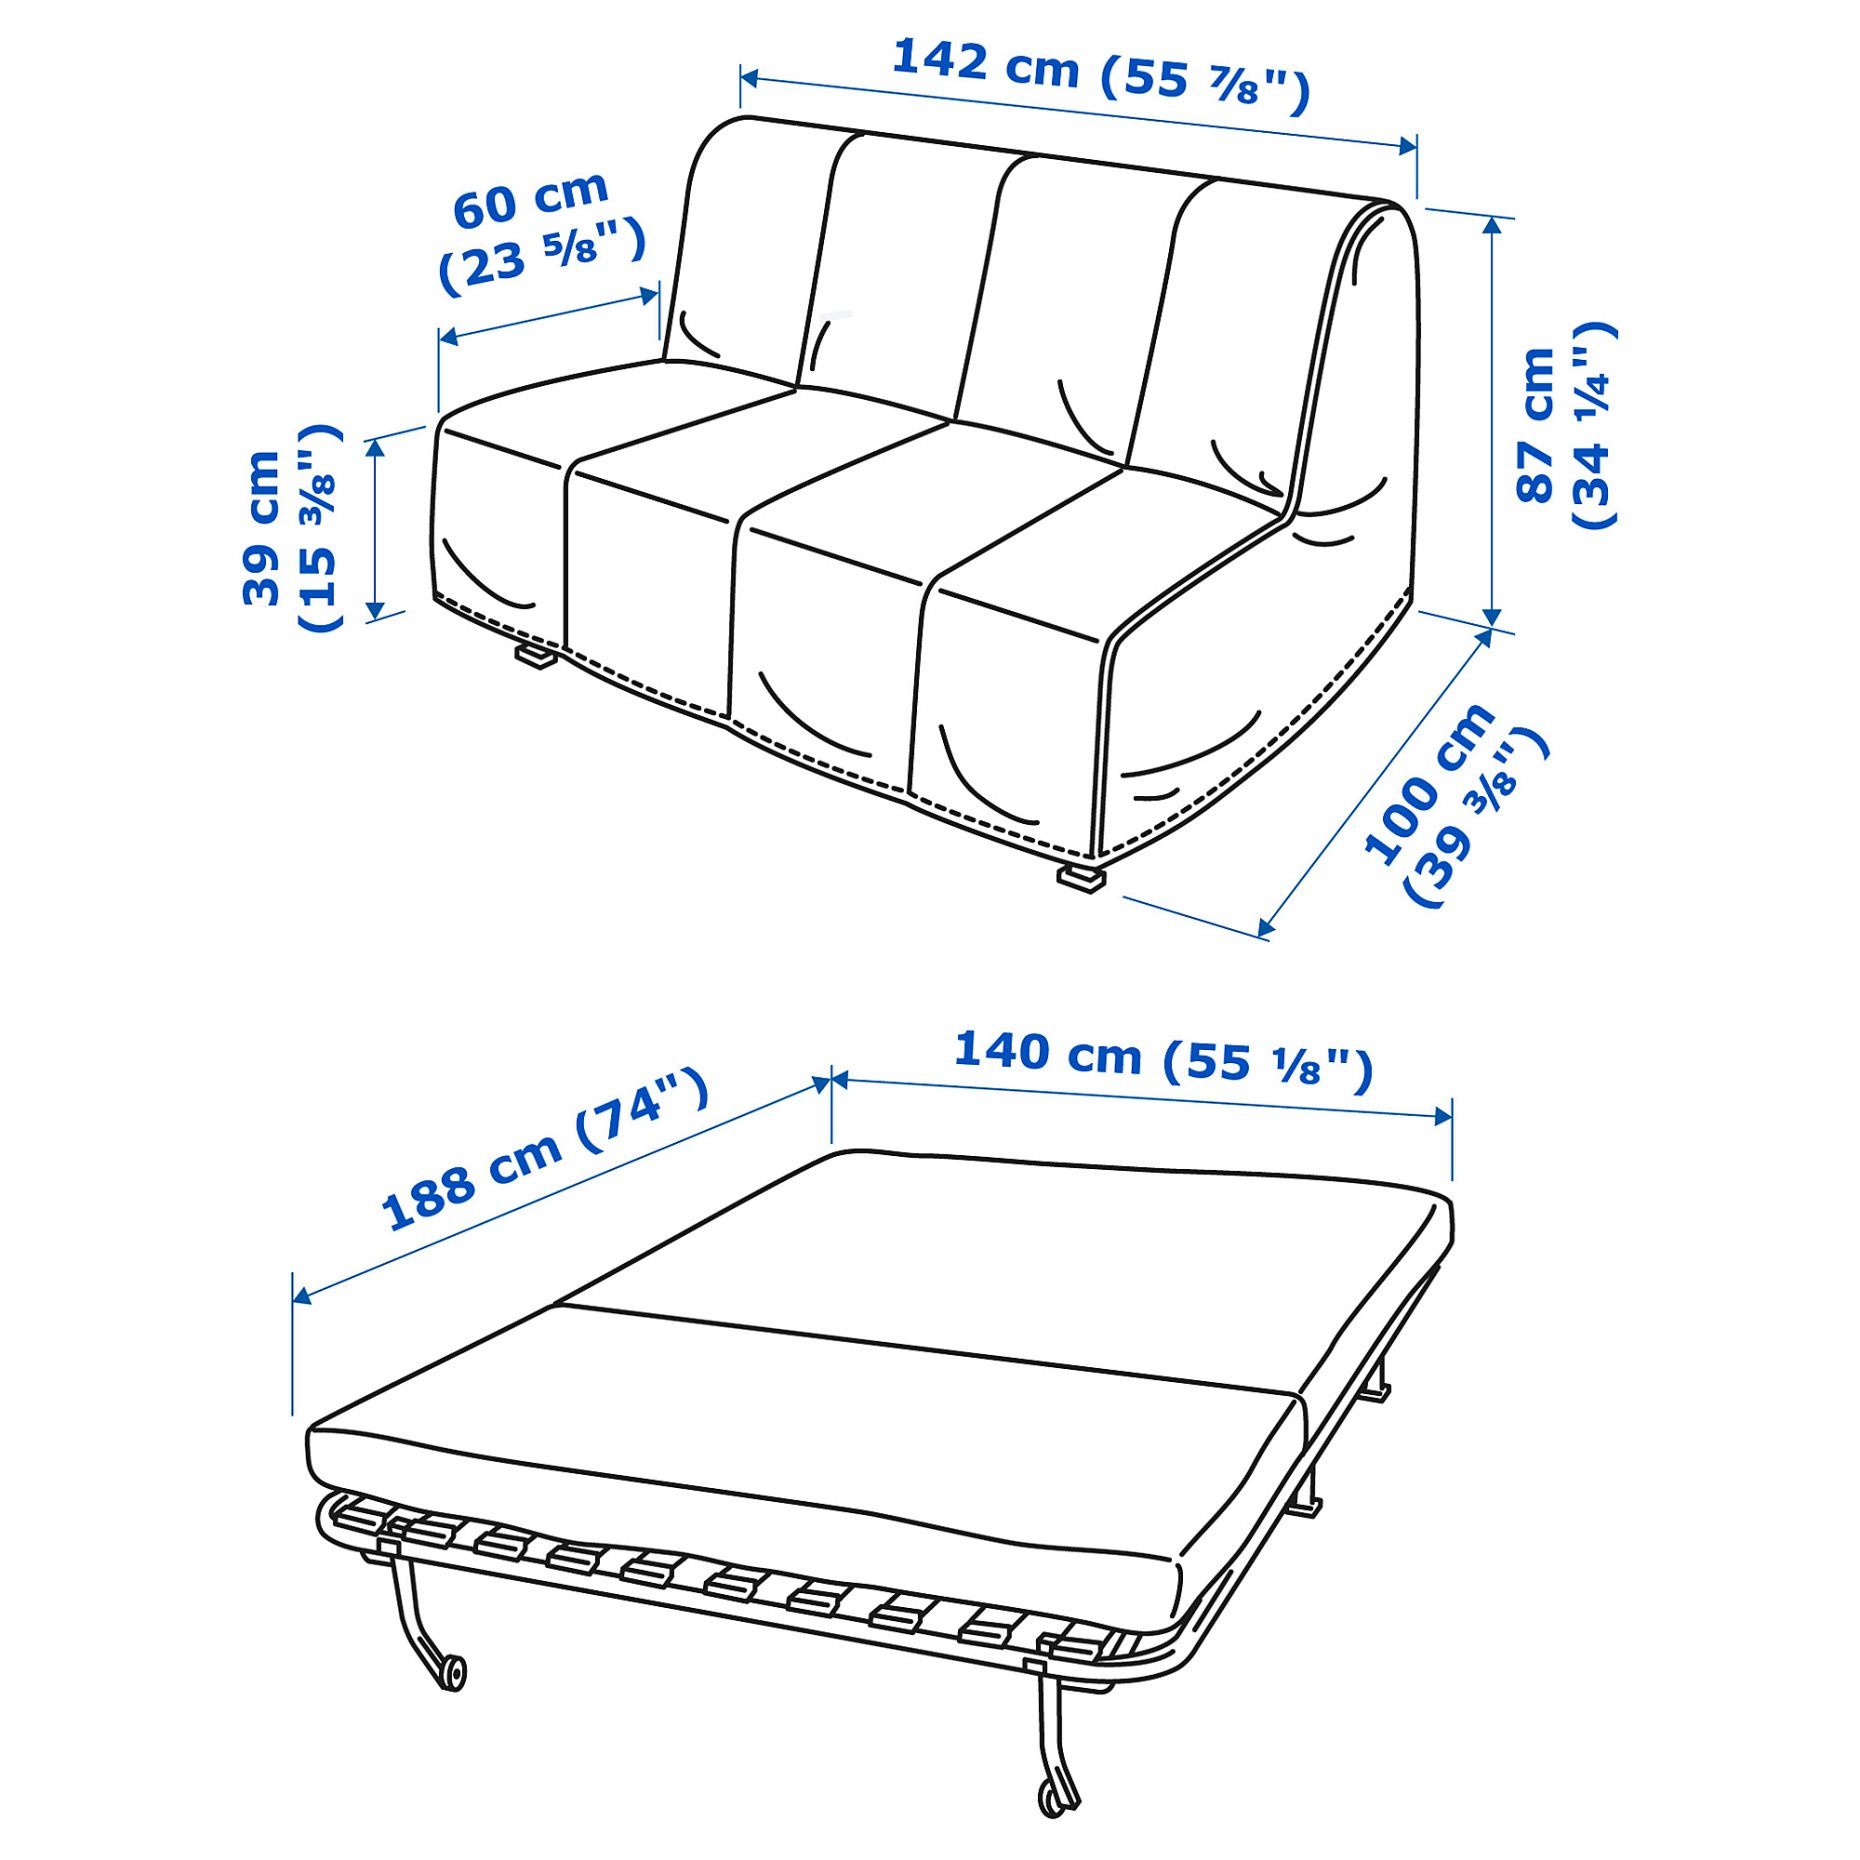 LYCKSELE HAVET, διθέσιος καναπές-κρεβάτι, 193.870.30